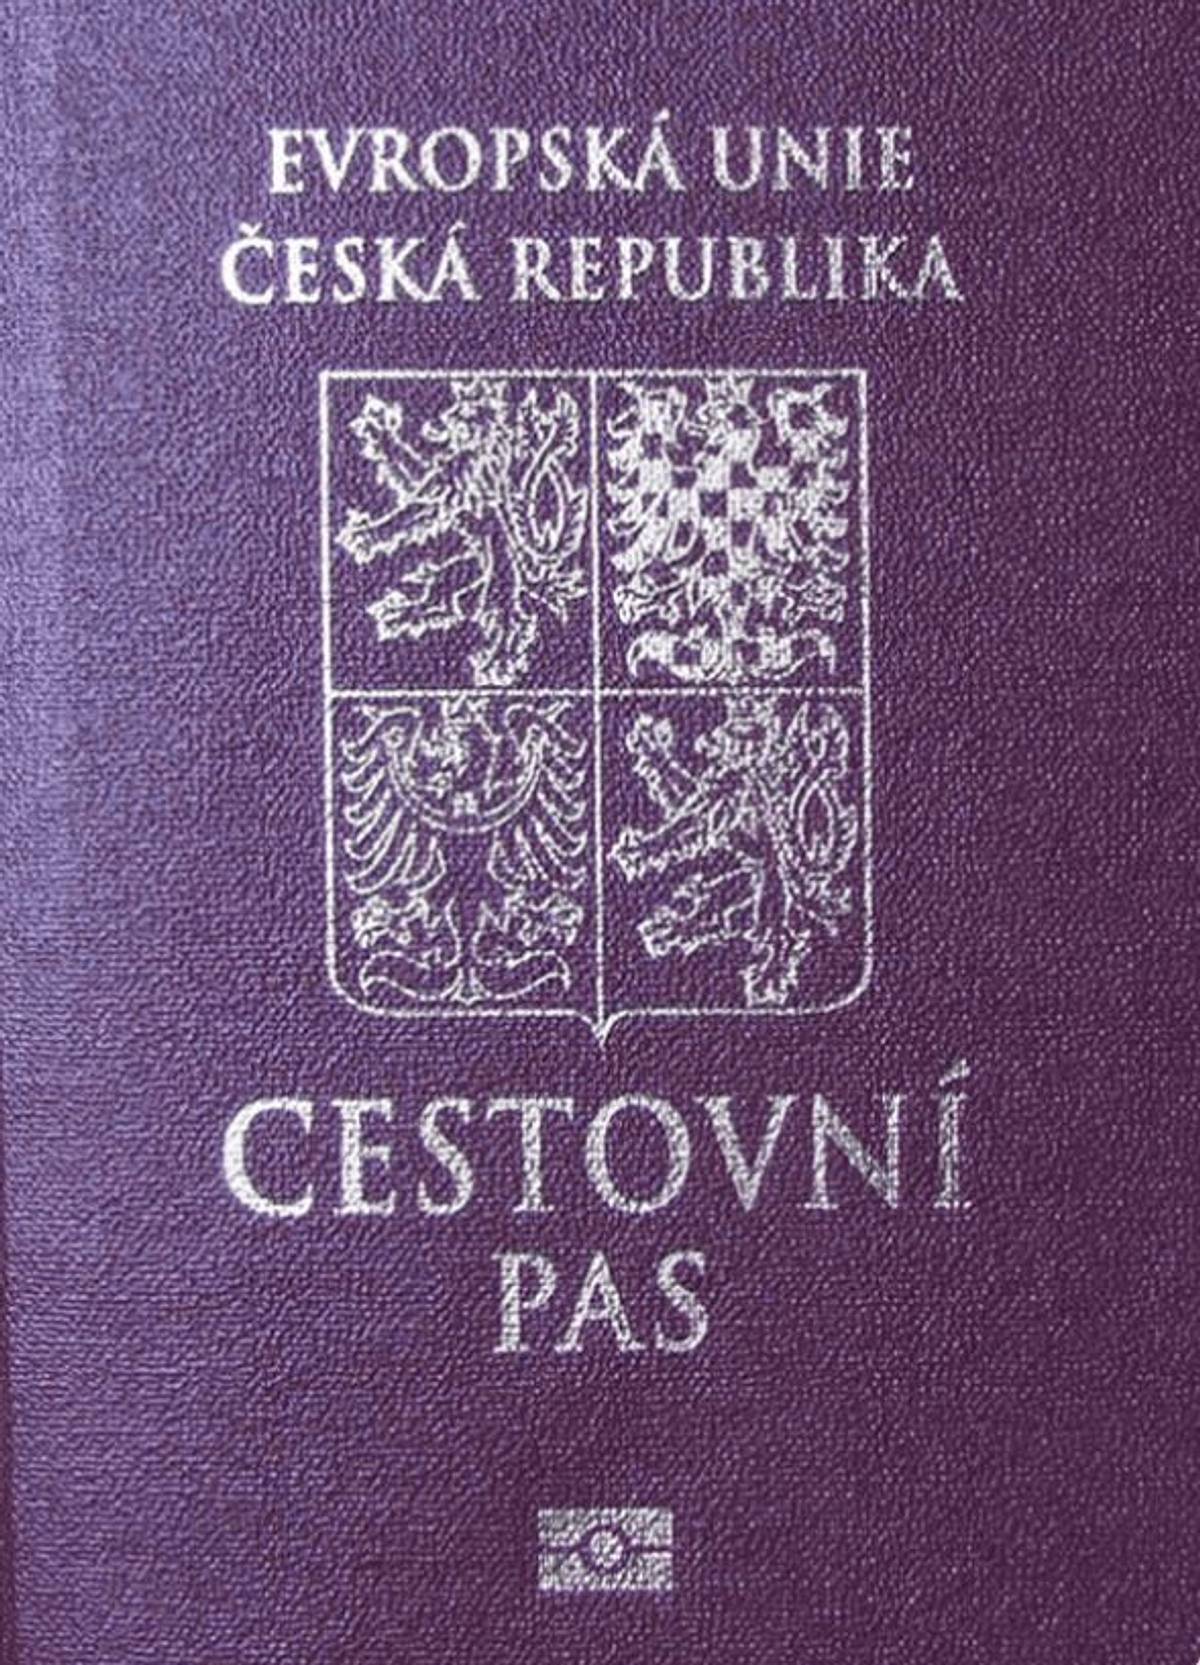 Tschechien-Reisepass